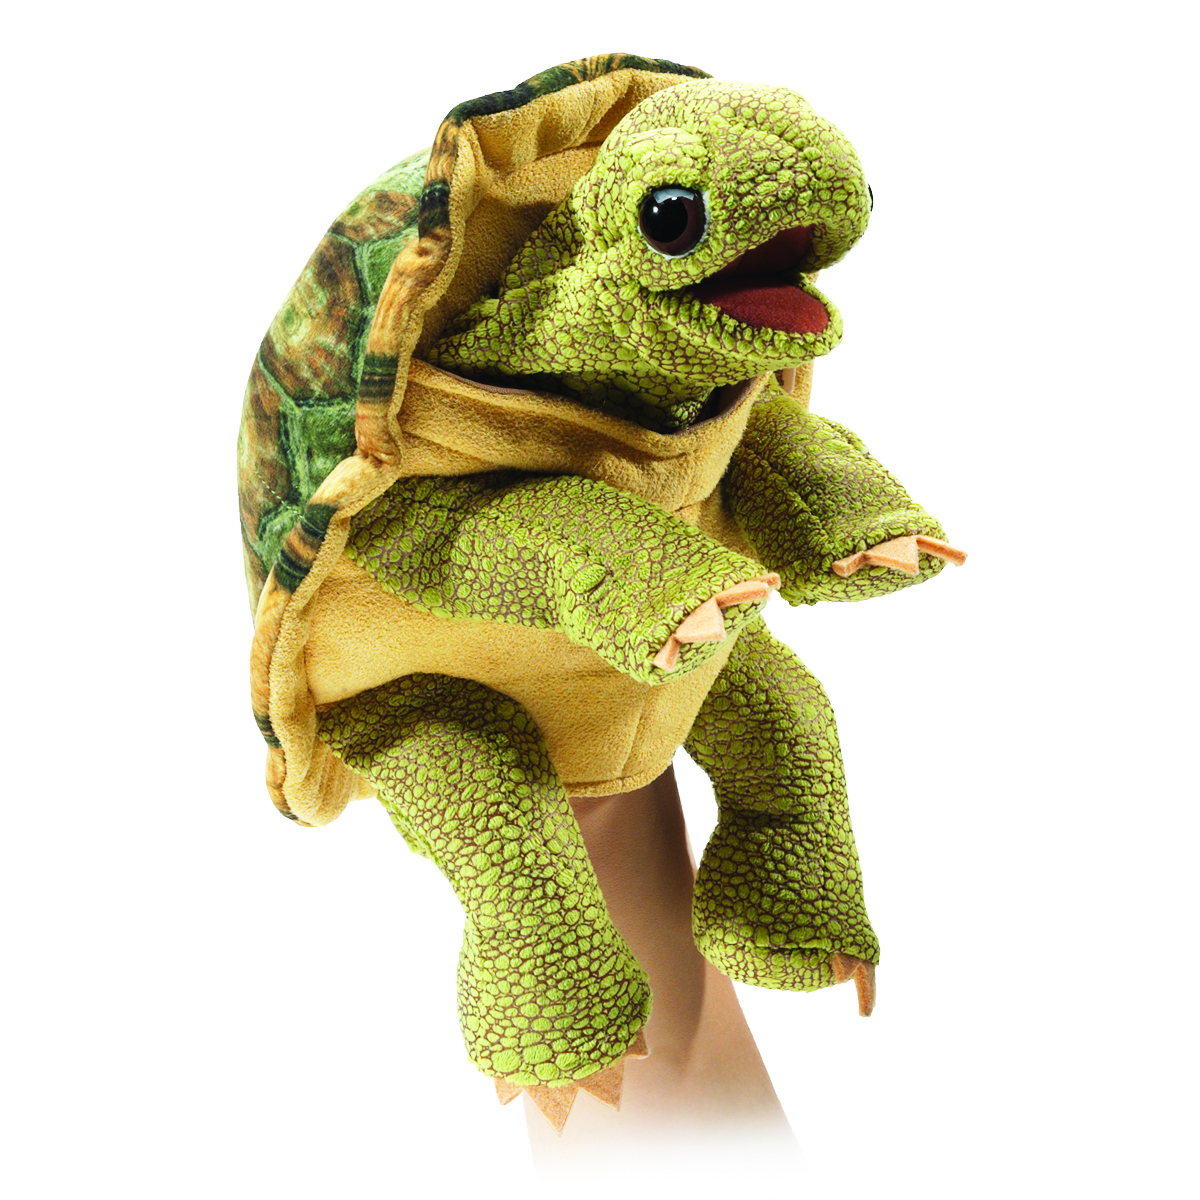 Folkmanis hand puppet standing tortoise